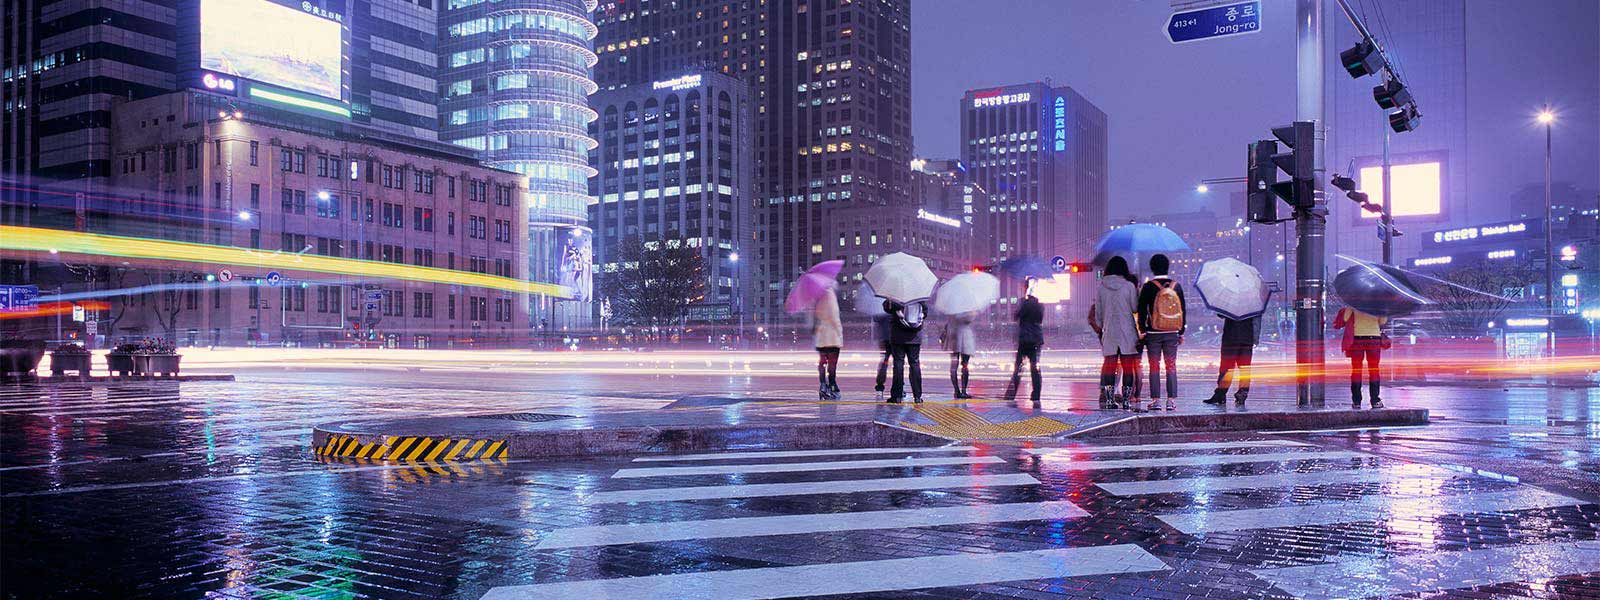 People holding umbrella on a rainy evening